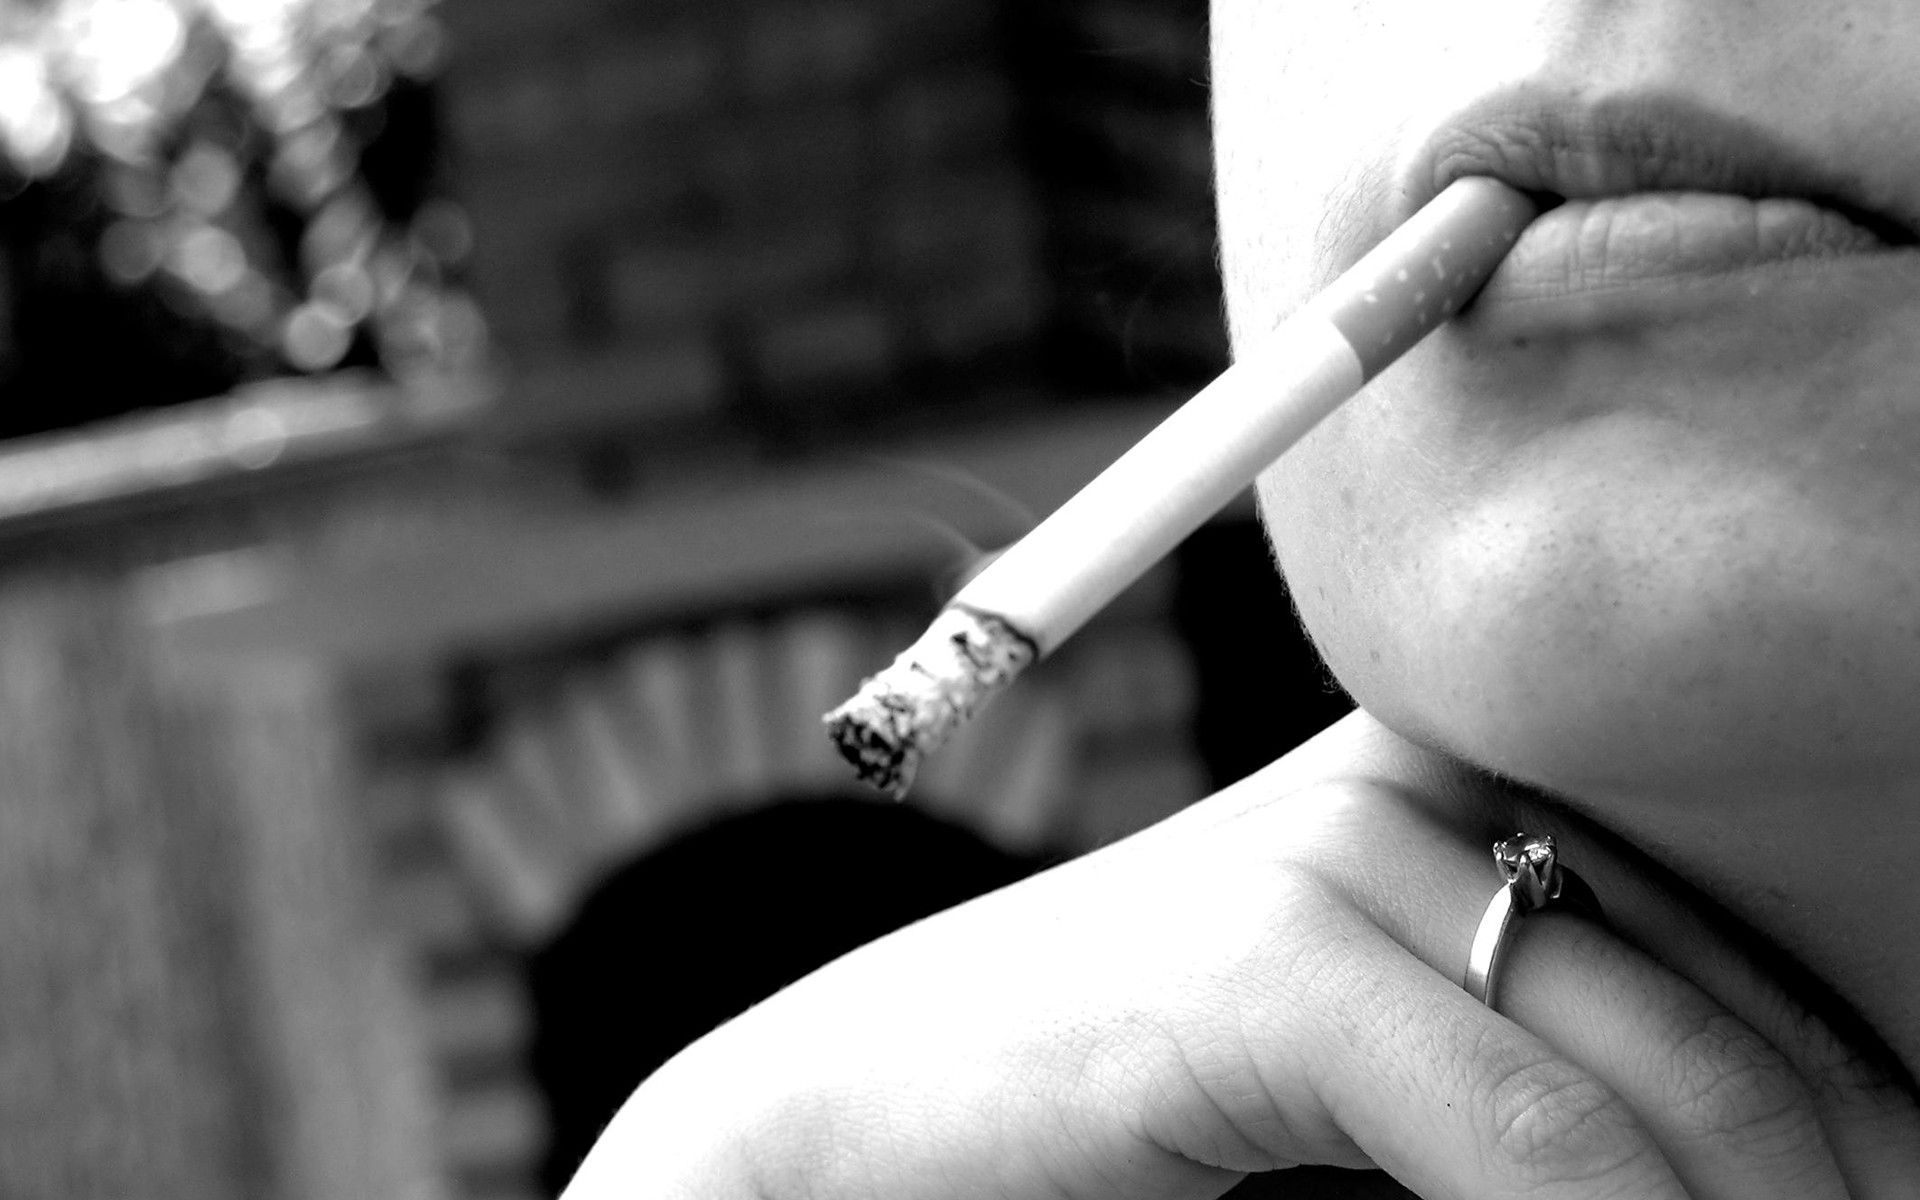 Girl smokes cigarette image desktop wallpaper for desktop PC Wallpaper and Background